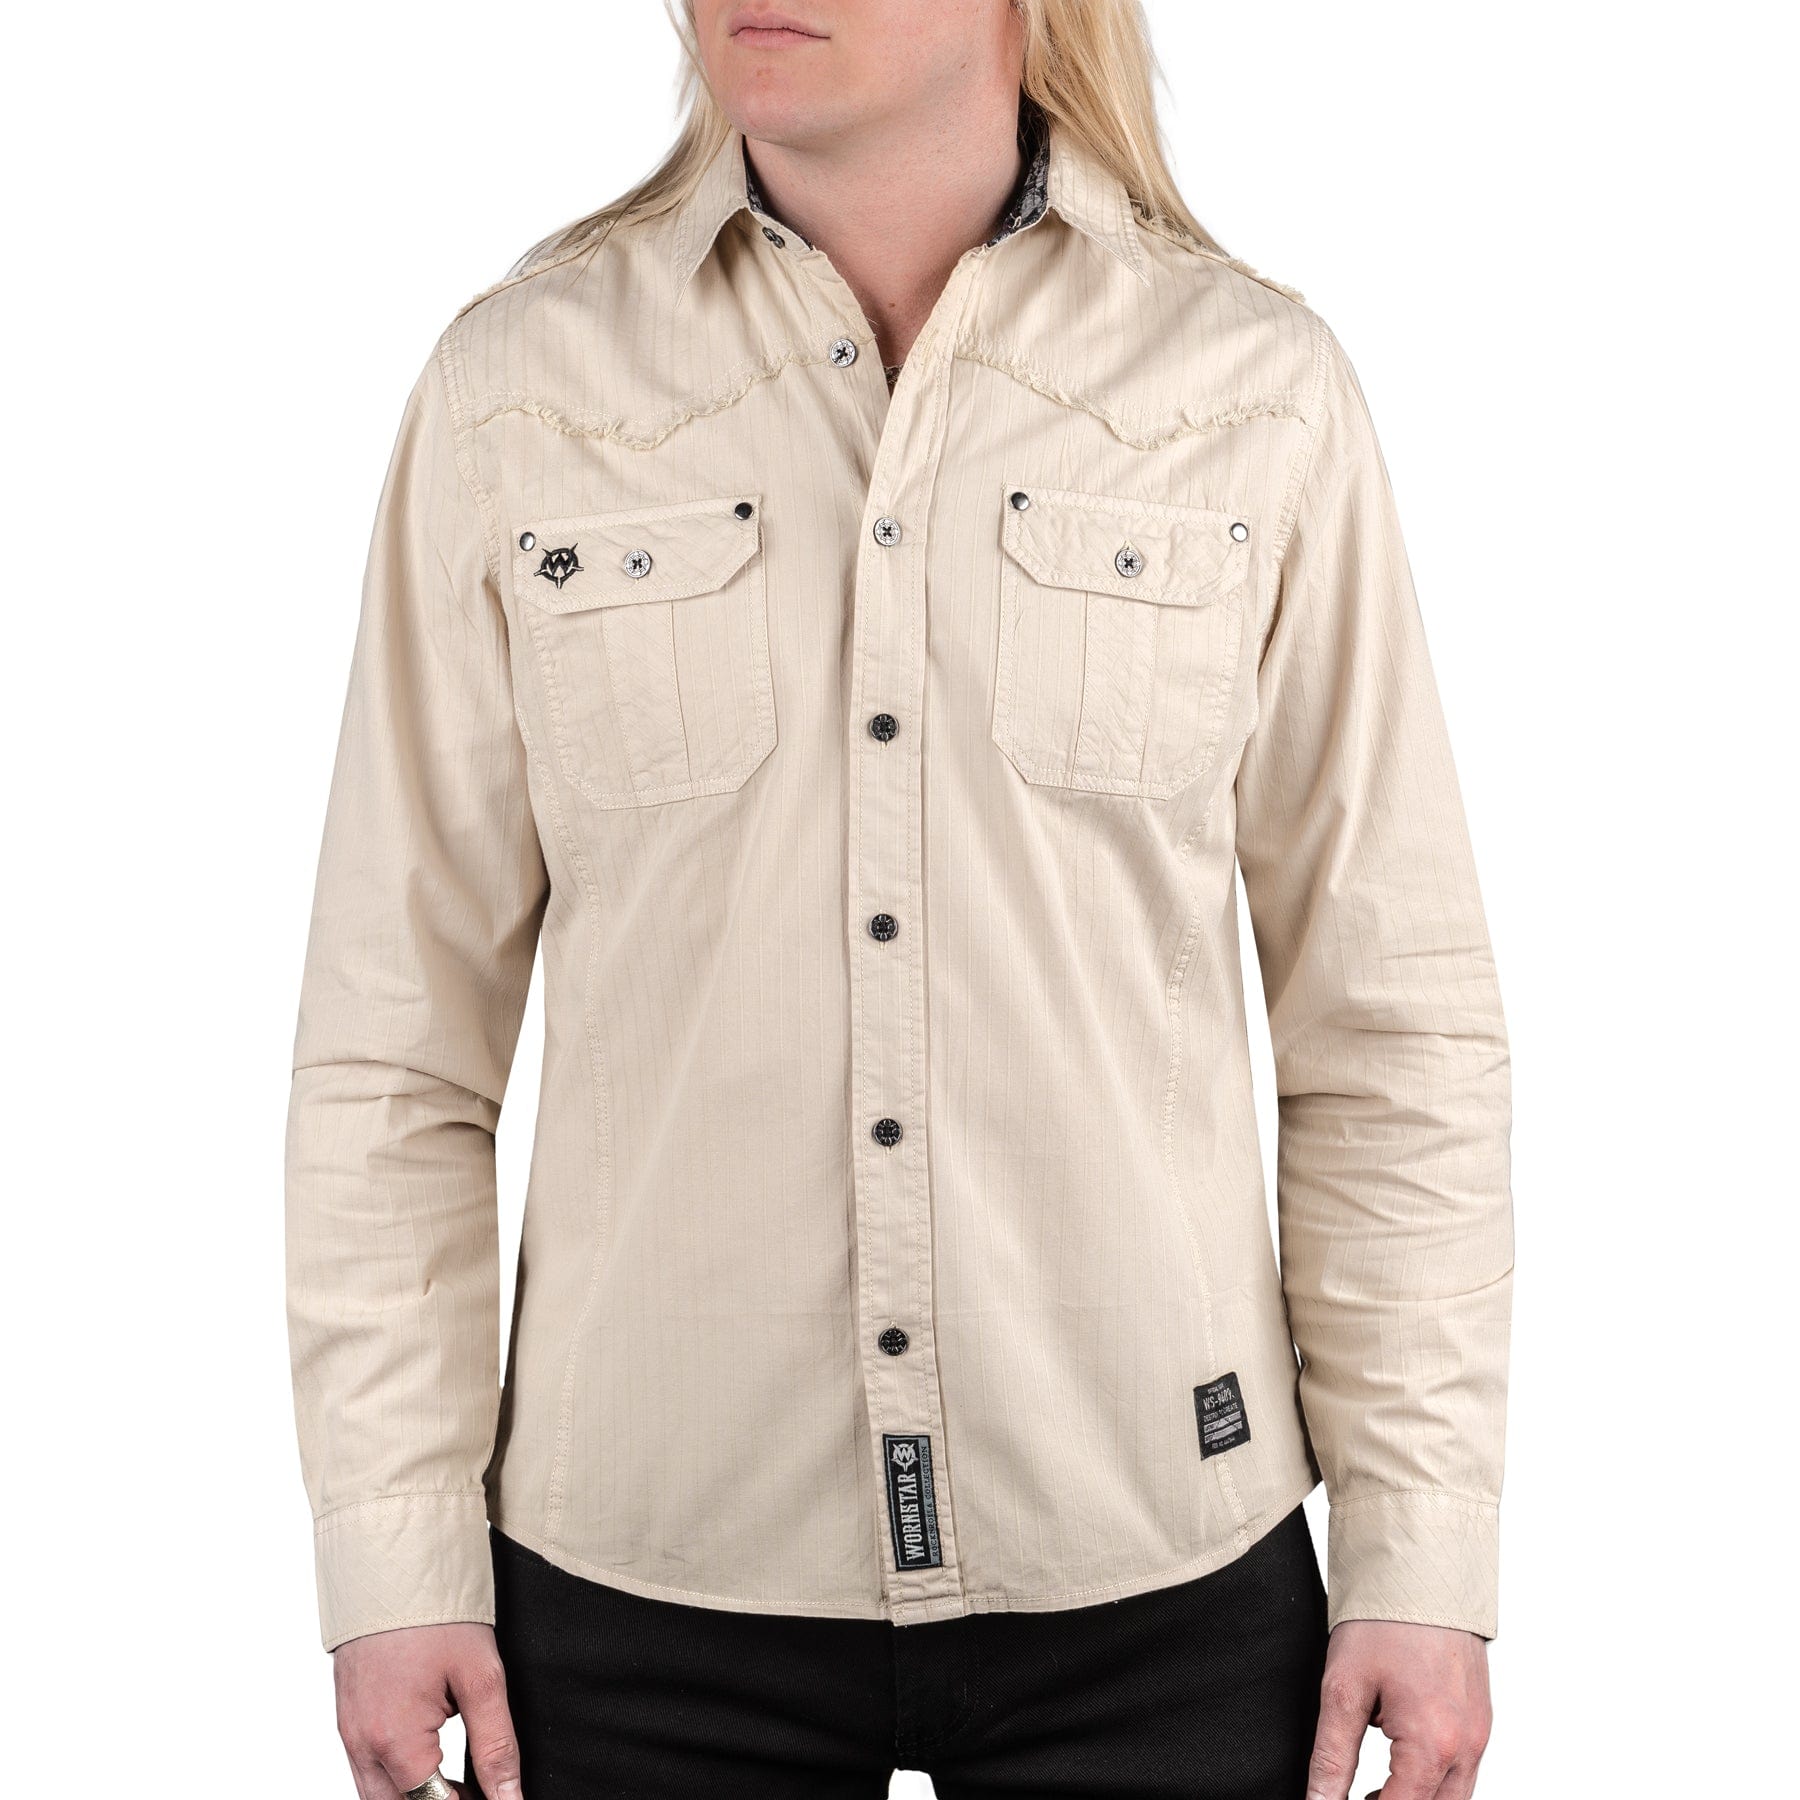 Wornstar Clothing Mens Shirt. Button Down Raider Long Sleeve Shirt - Sand